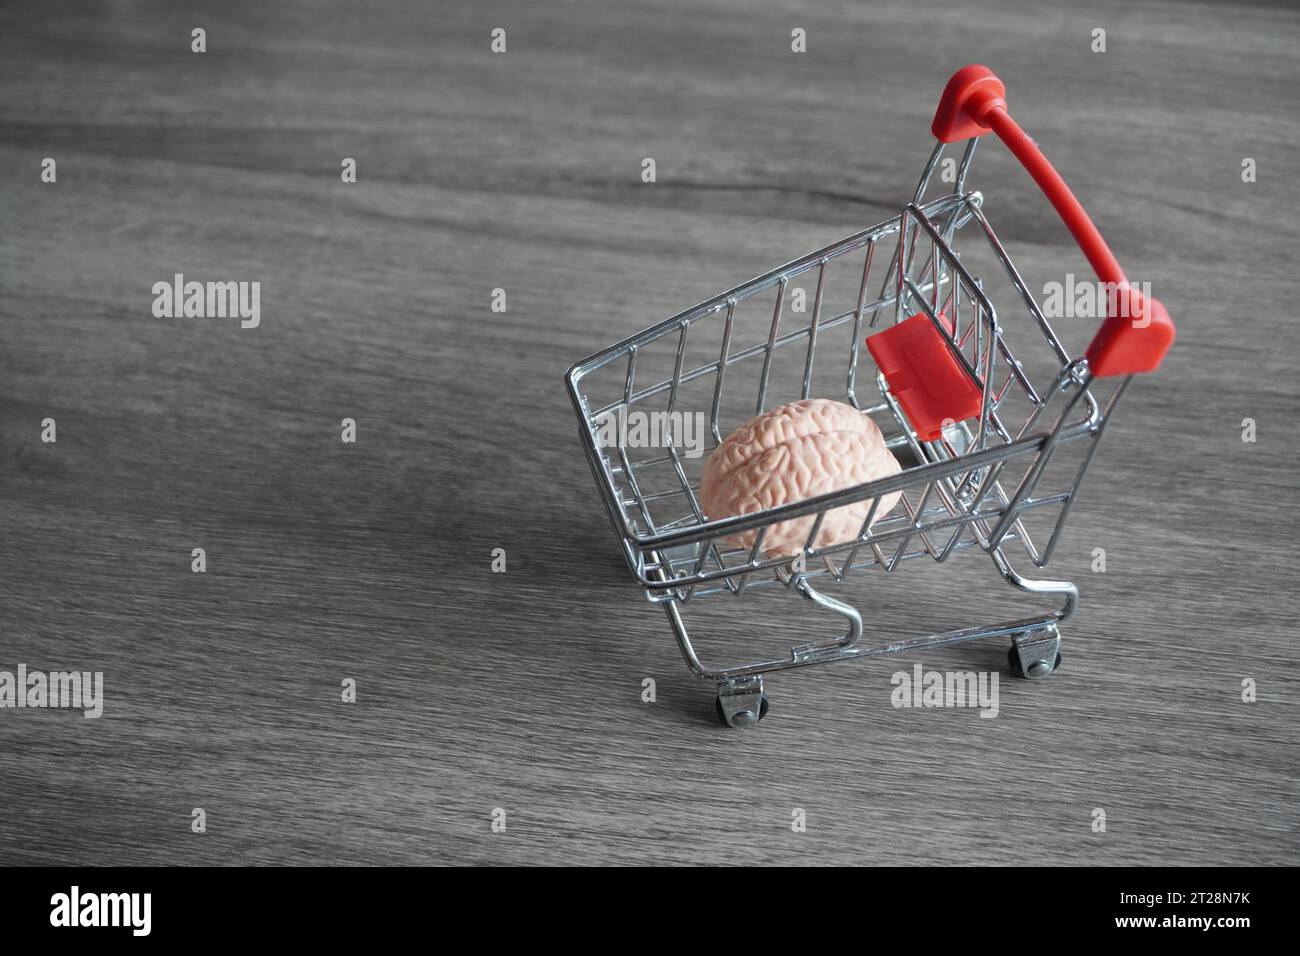 A human brain inside shopping carts. Consumer behavior, impulse buying and shopping addiction concept. Stock Photo